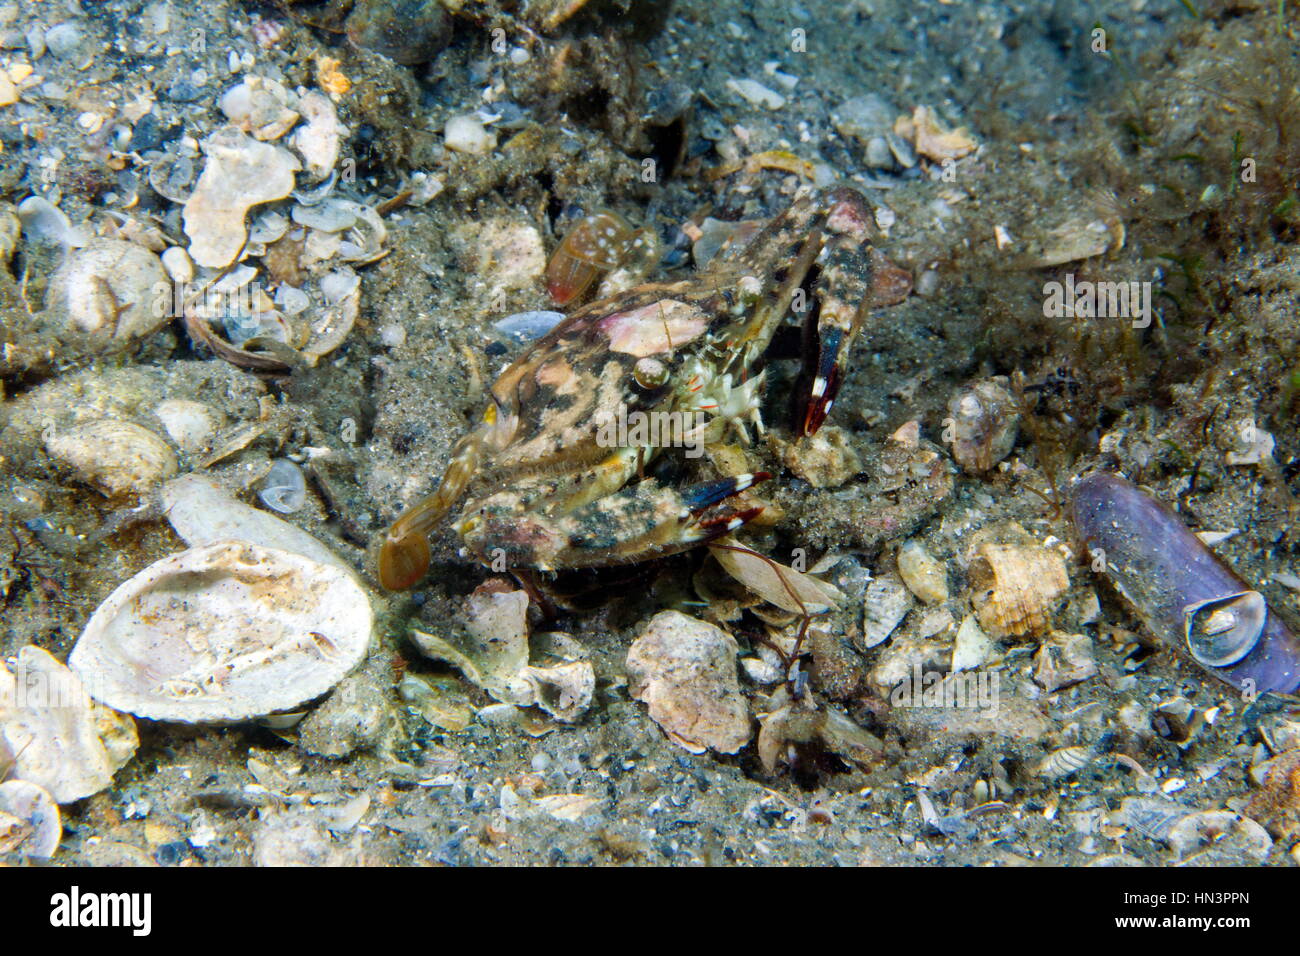 A Camouflaged blotched swimming crab, Portunus spinimanus, on sea floor. Stock Photo